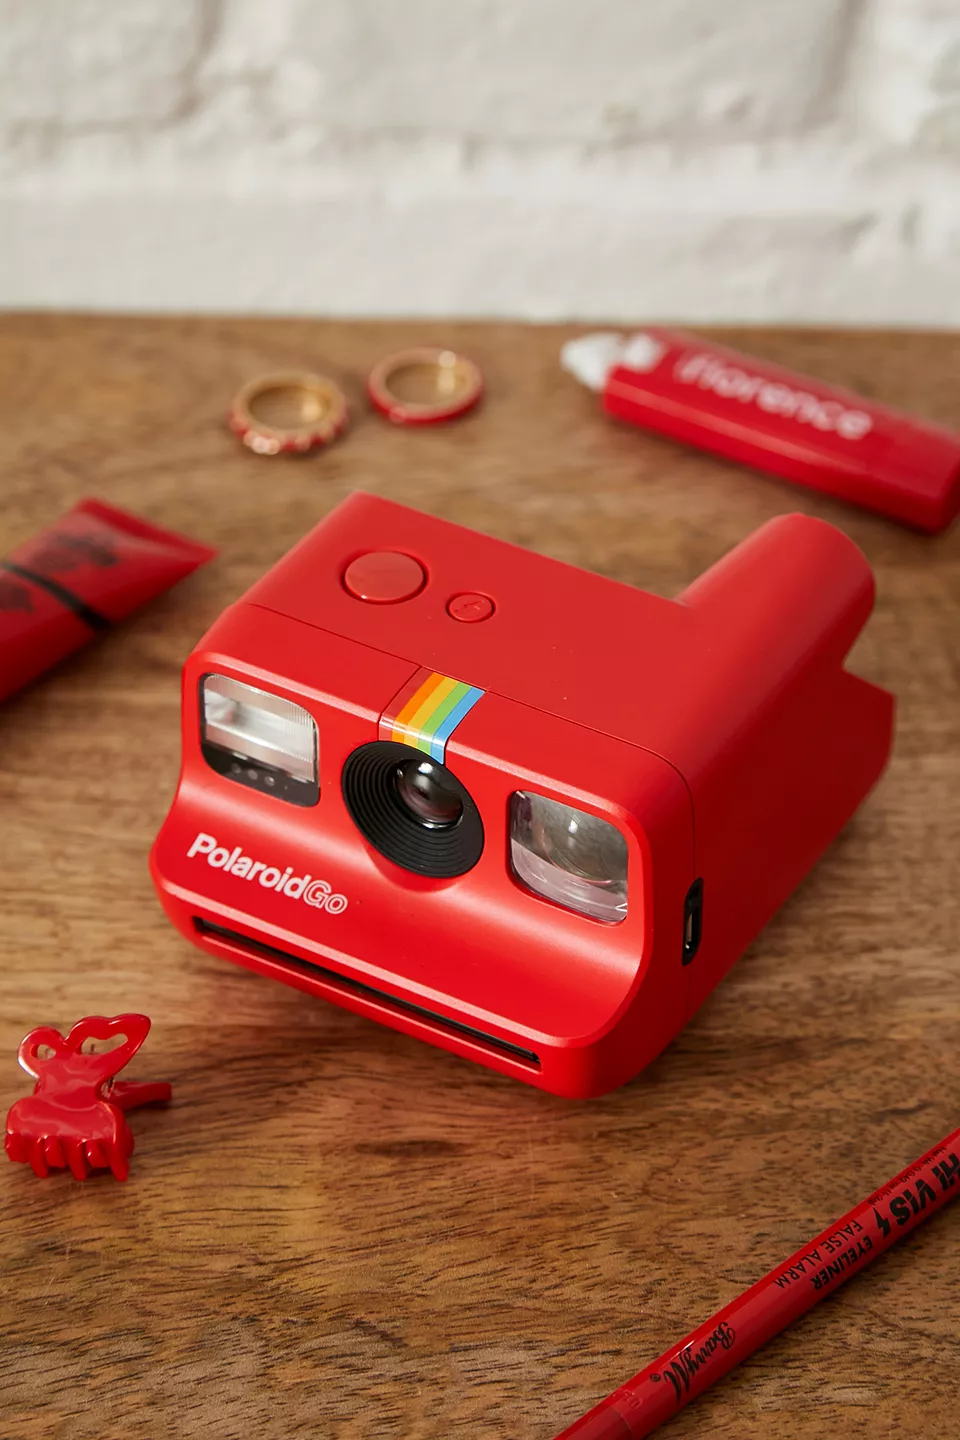 urbanoutfitters.com | Polaroid Go Red Instant Camera